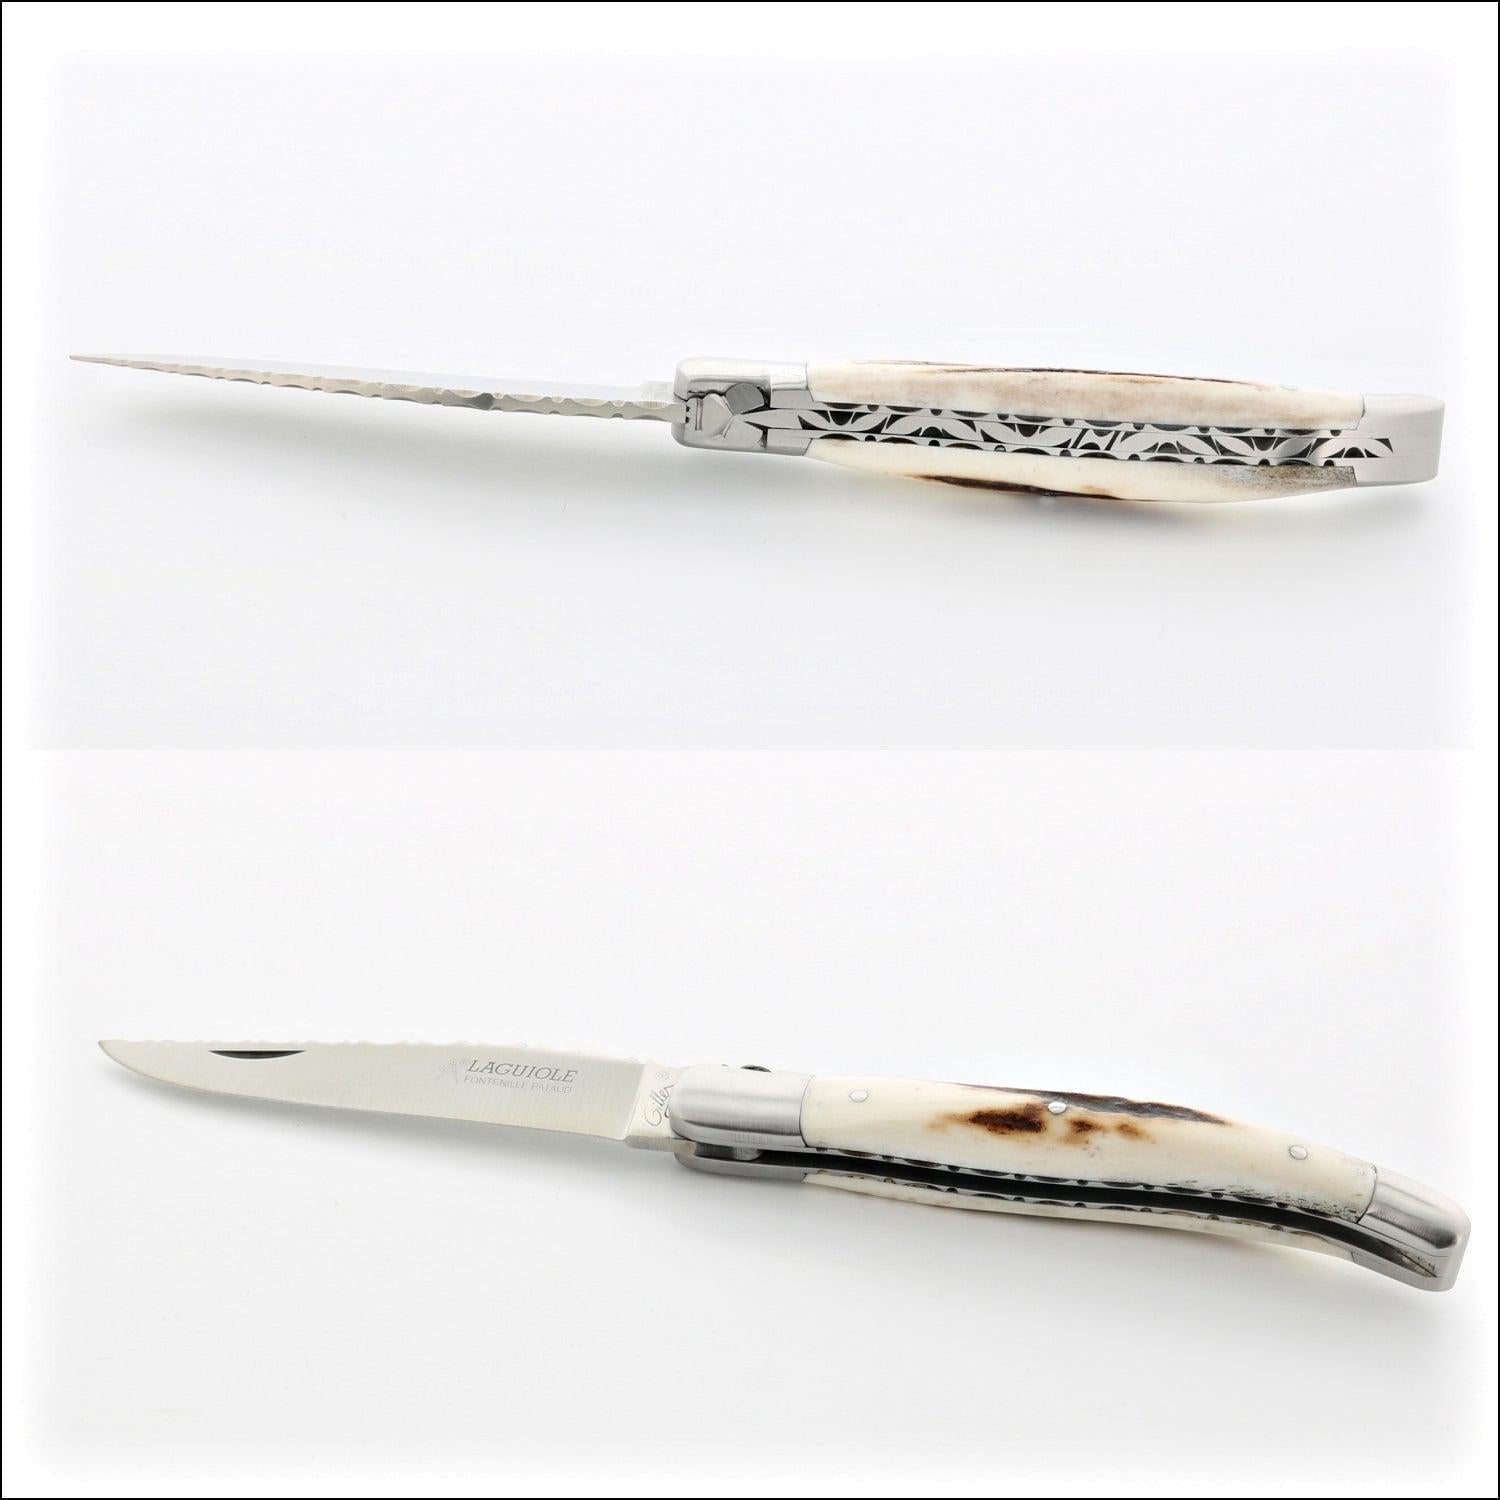 Fontenille Pataud Classic Laguiole Corkscrew Knife Deer Stag Handle - A -  Laguiole Imports